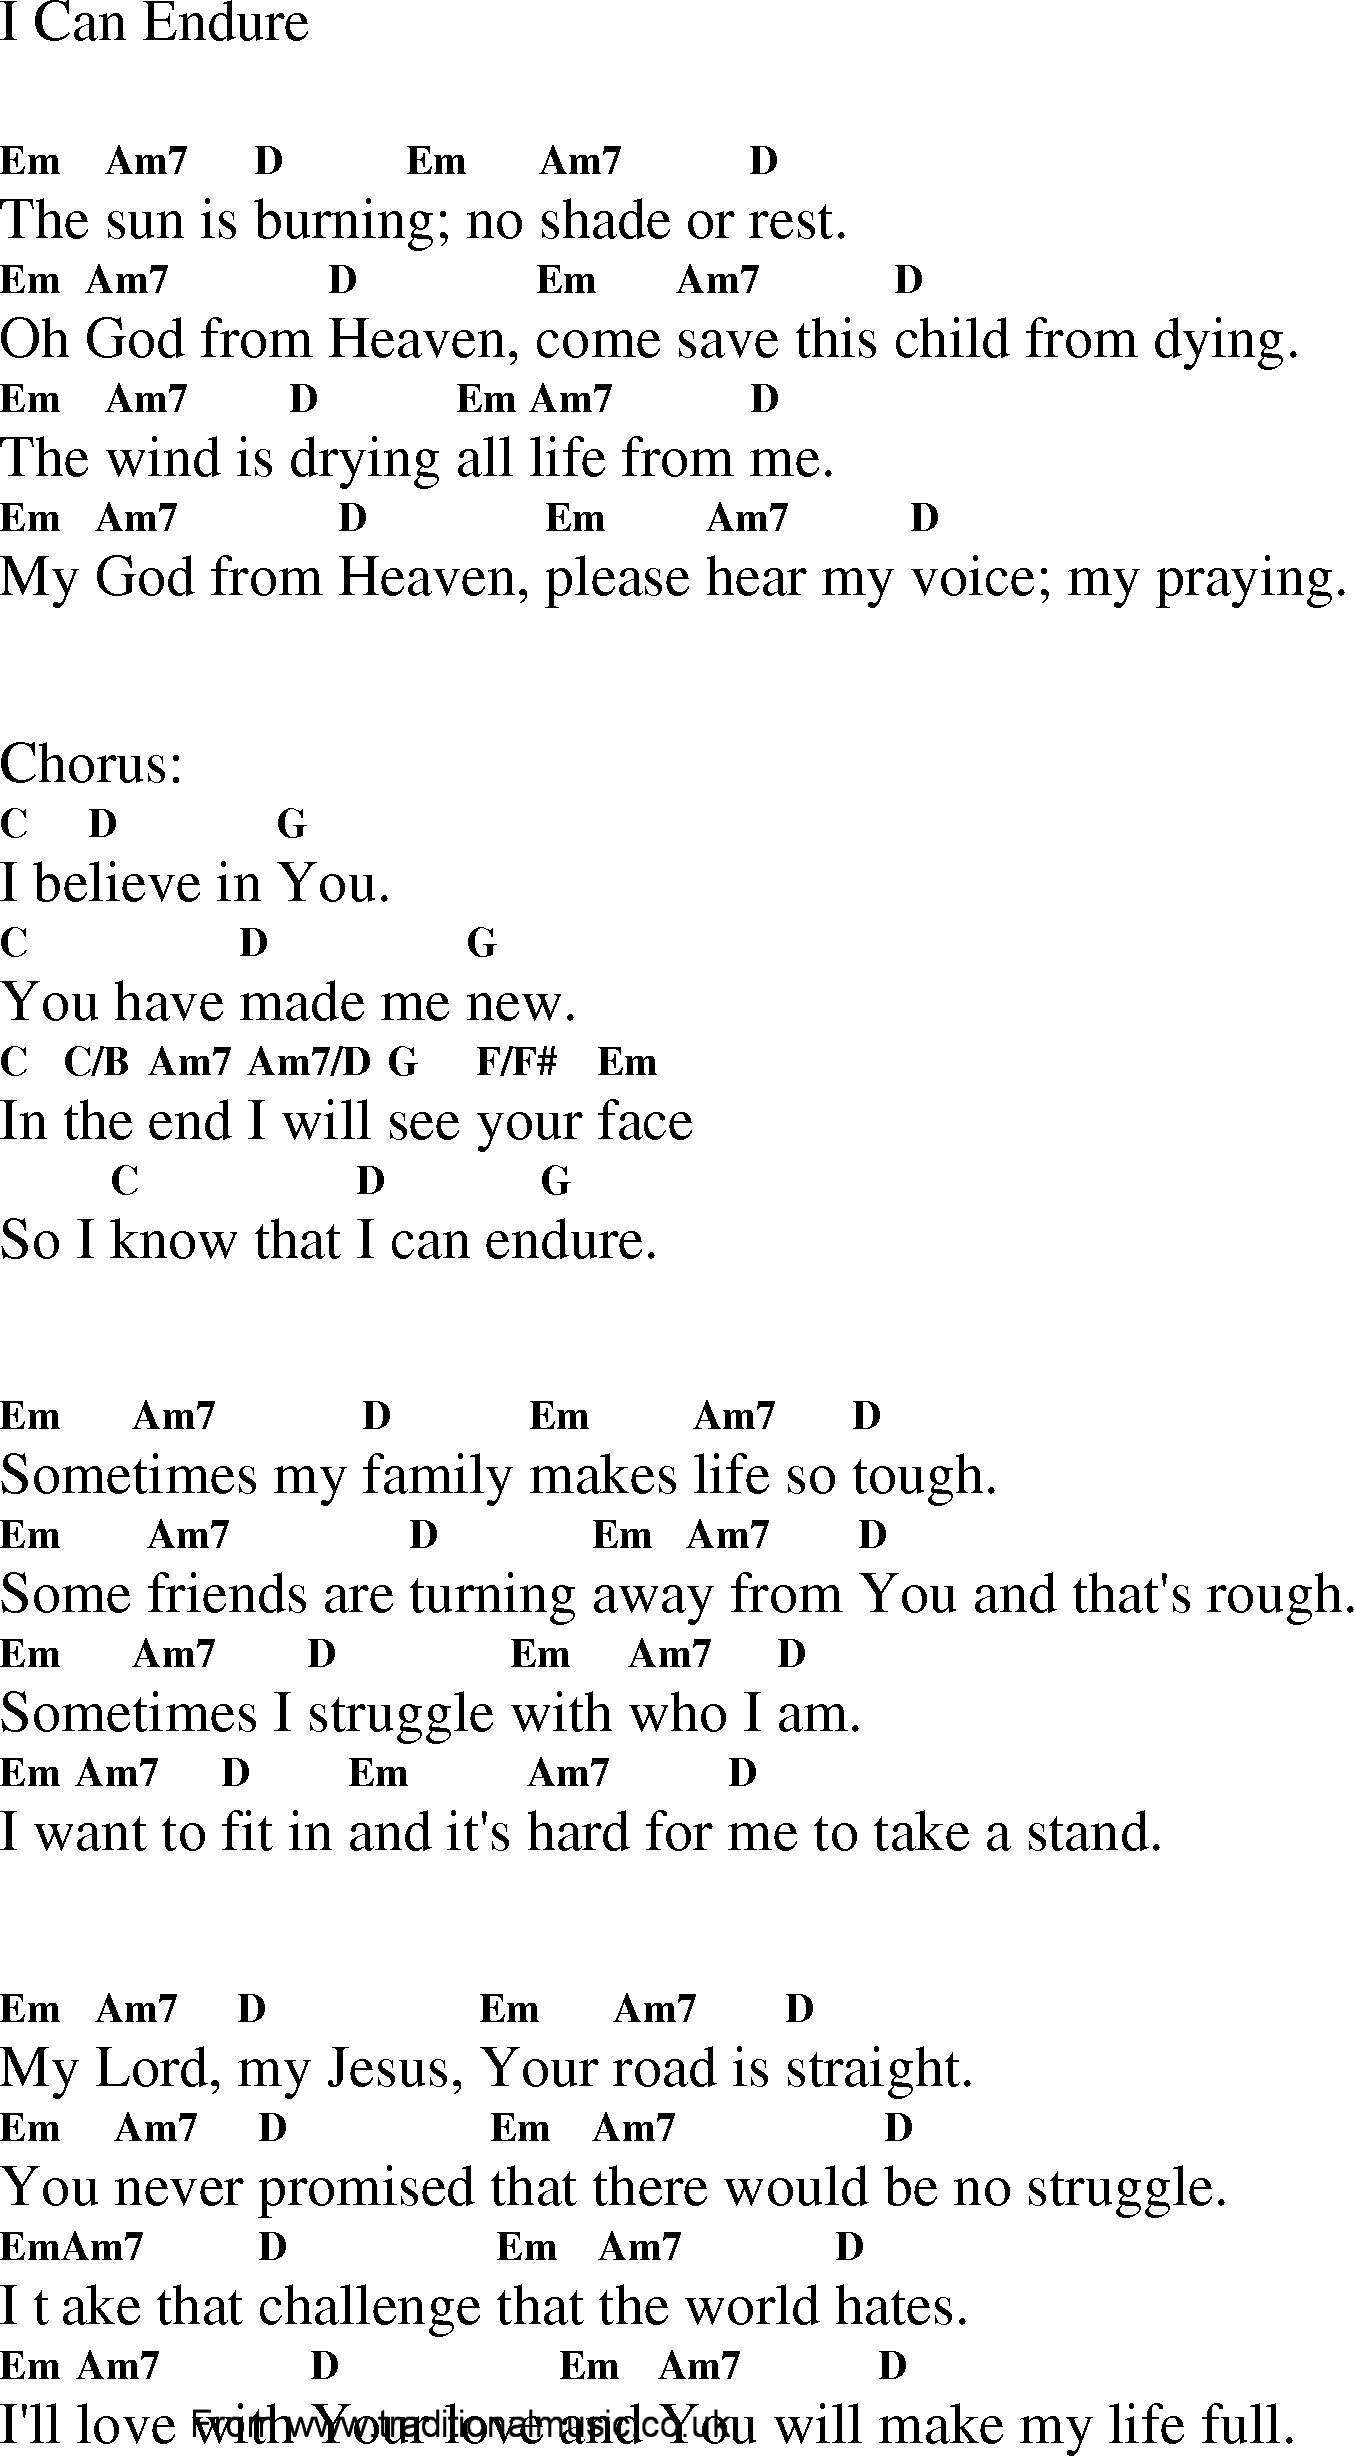 Gospel Song: i_can_endure, lyrics and chords.